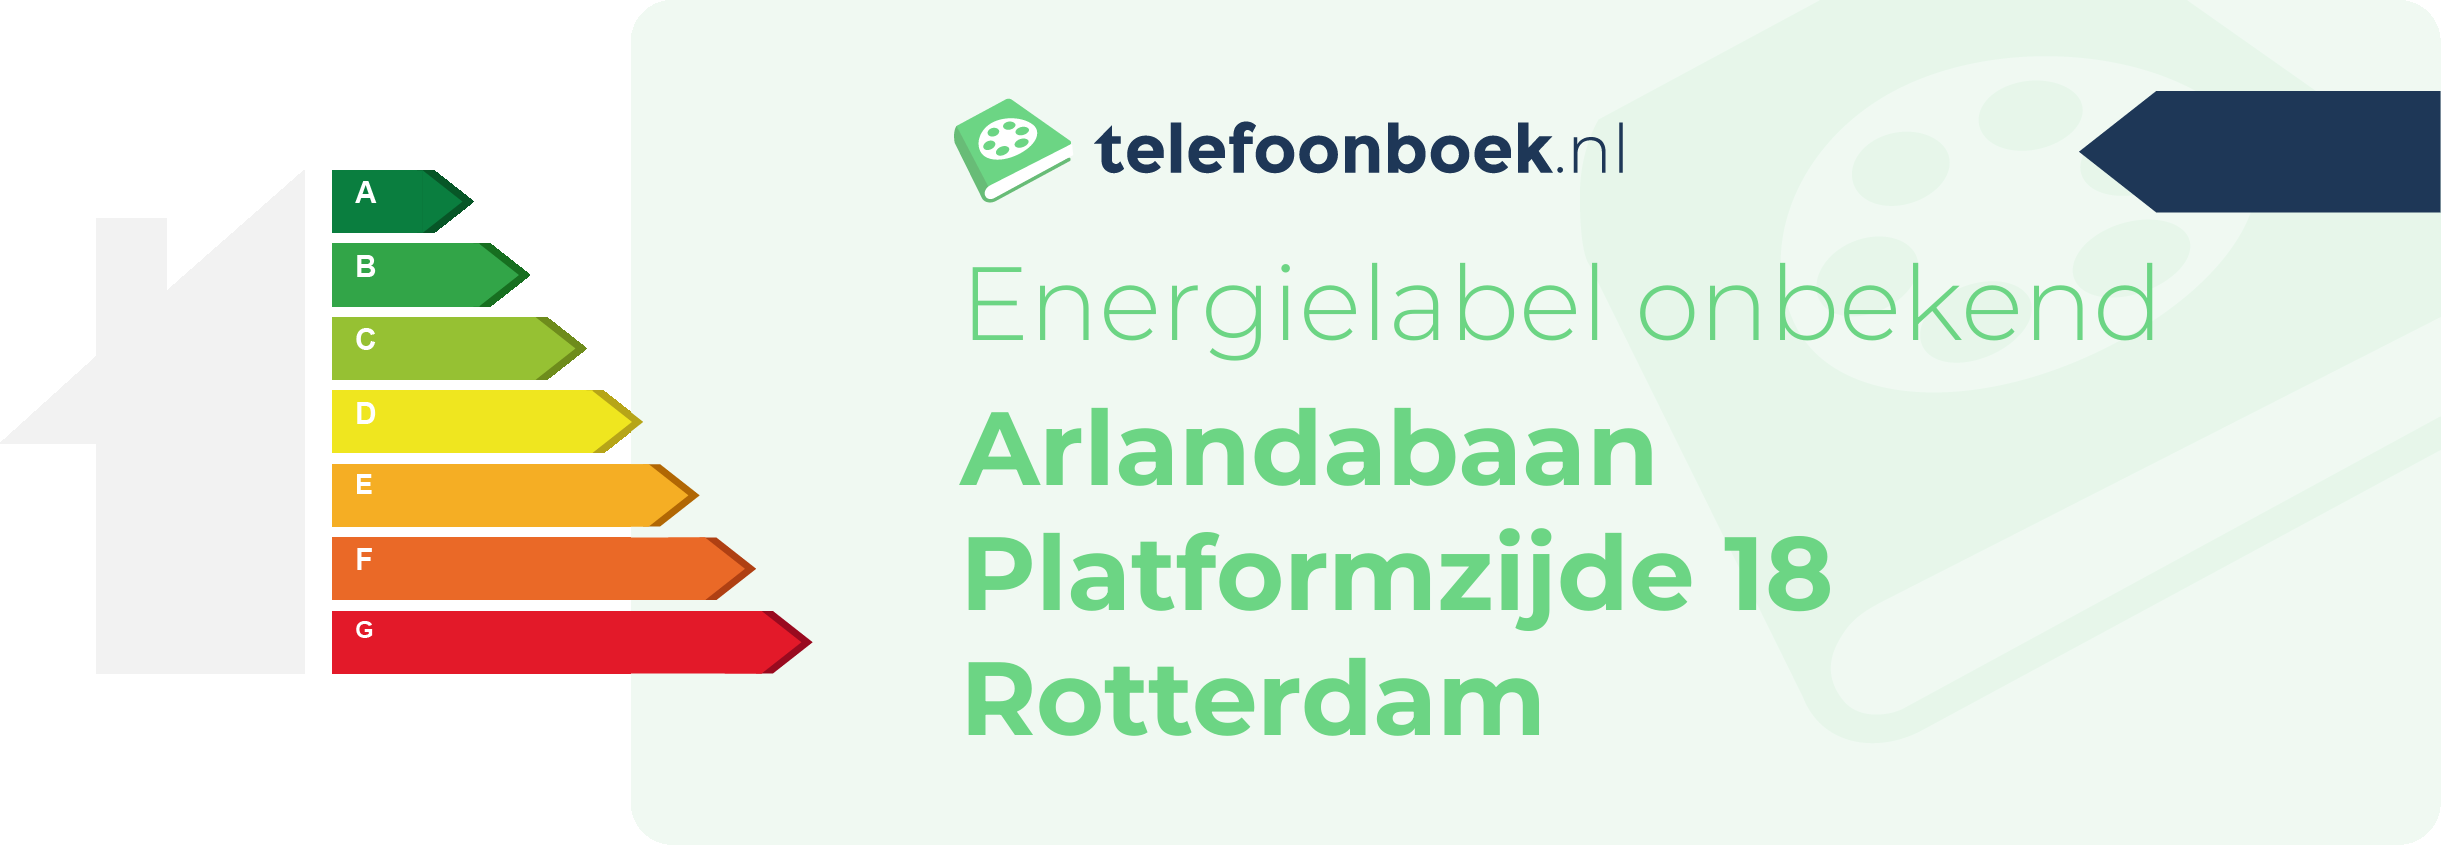 Energielabel Arlandabaan Platformzijde 18 Rotterdam